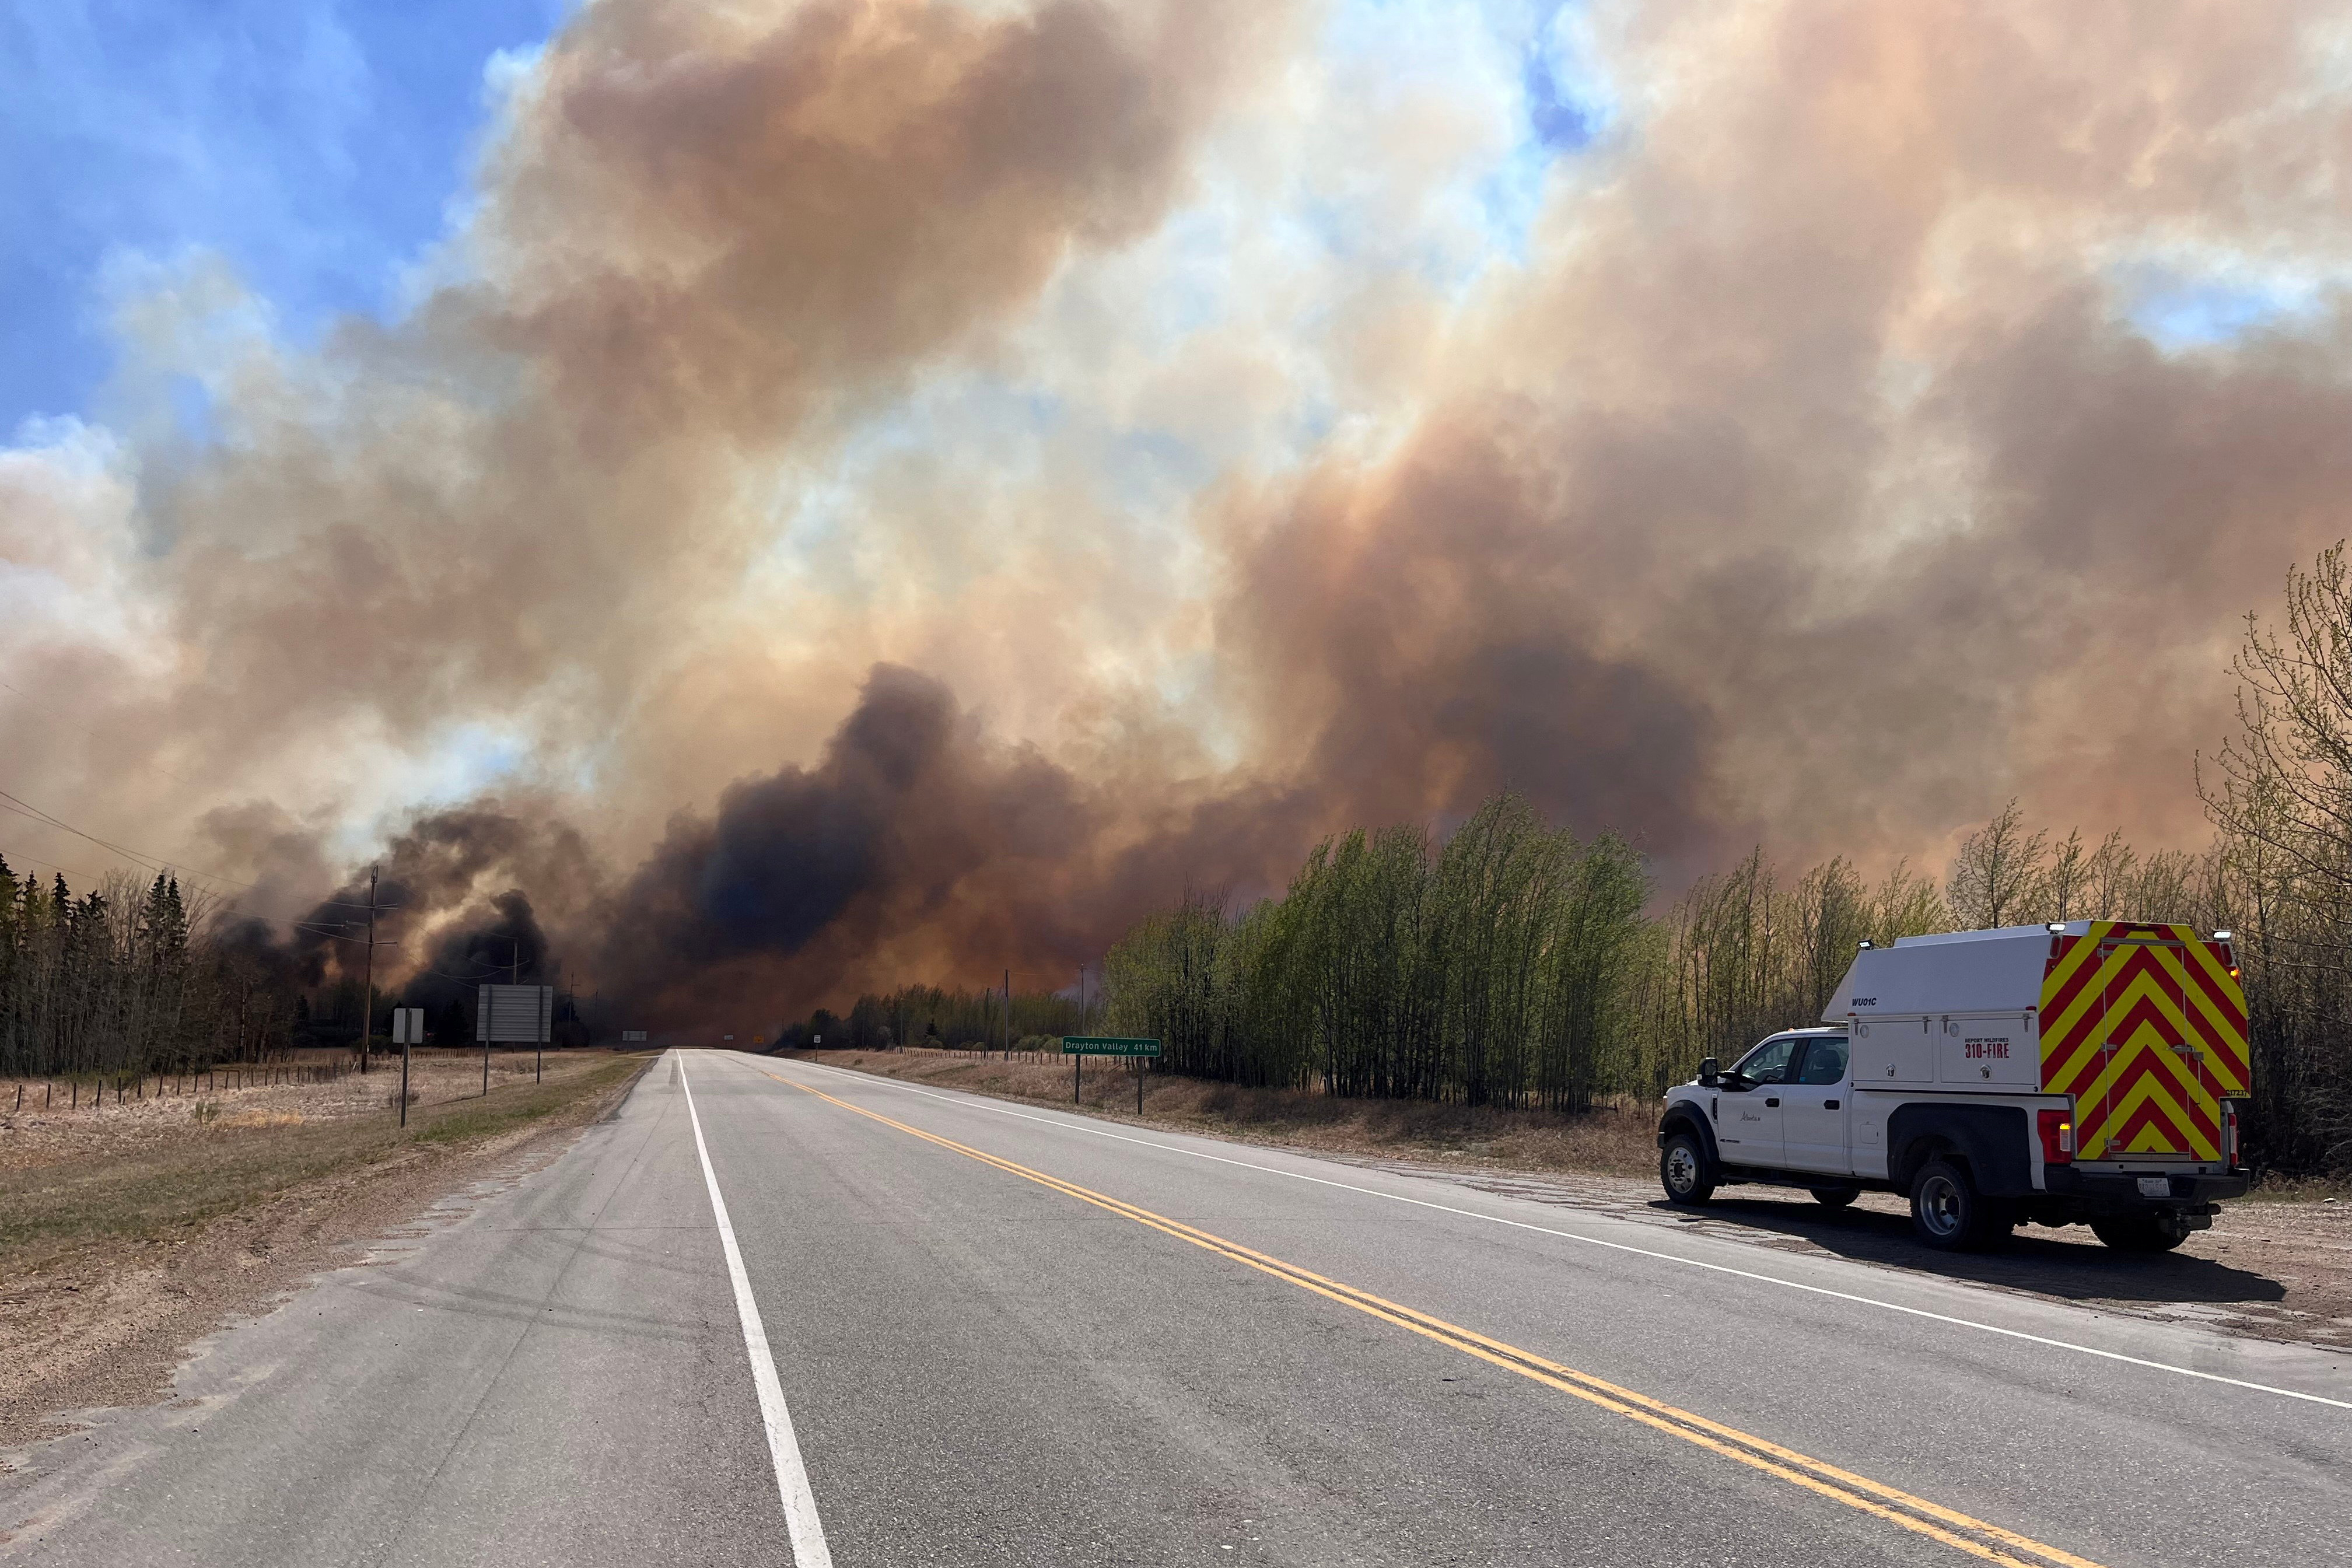  smoke column rises from wildfire near Alberta, Canada